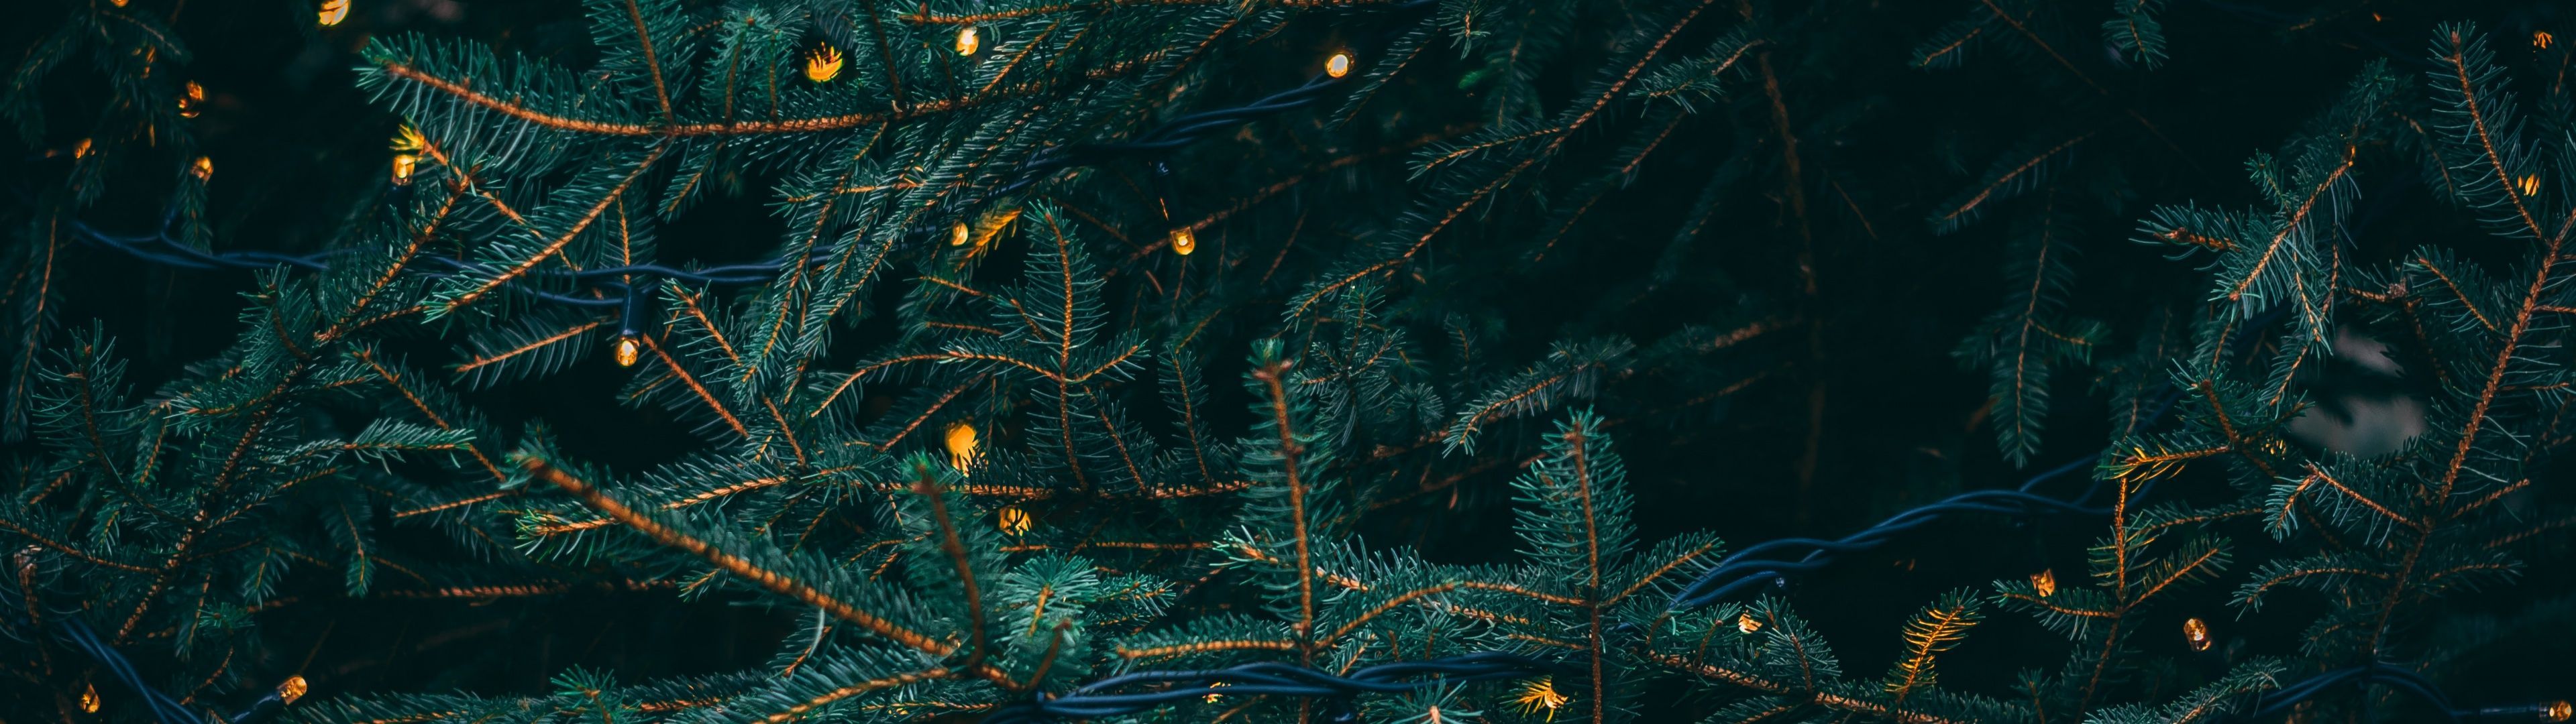 Pine Trees Wallpaper 4K, Decoration, LED Lights, Celebrations Christmas